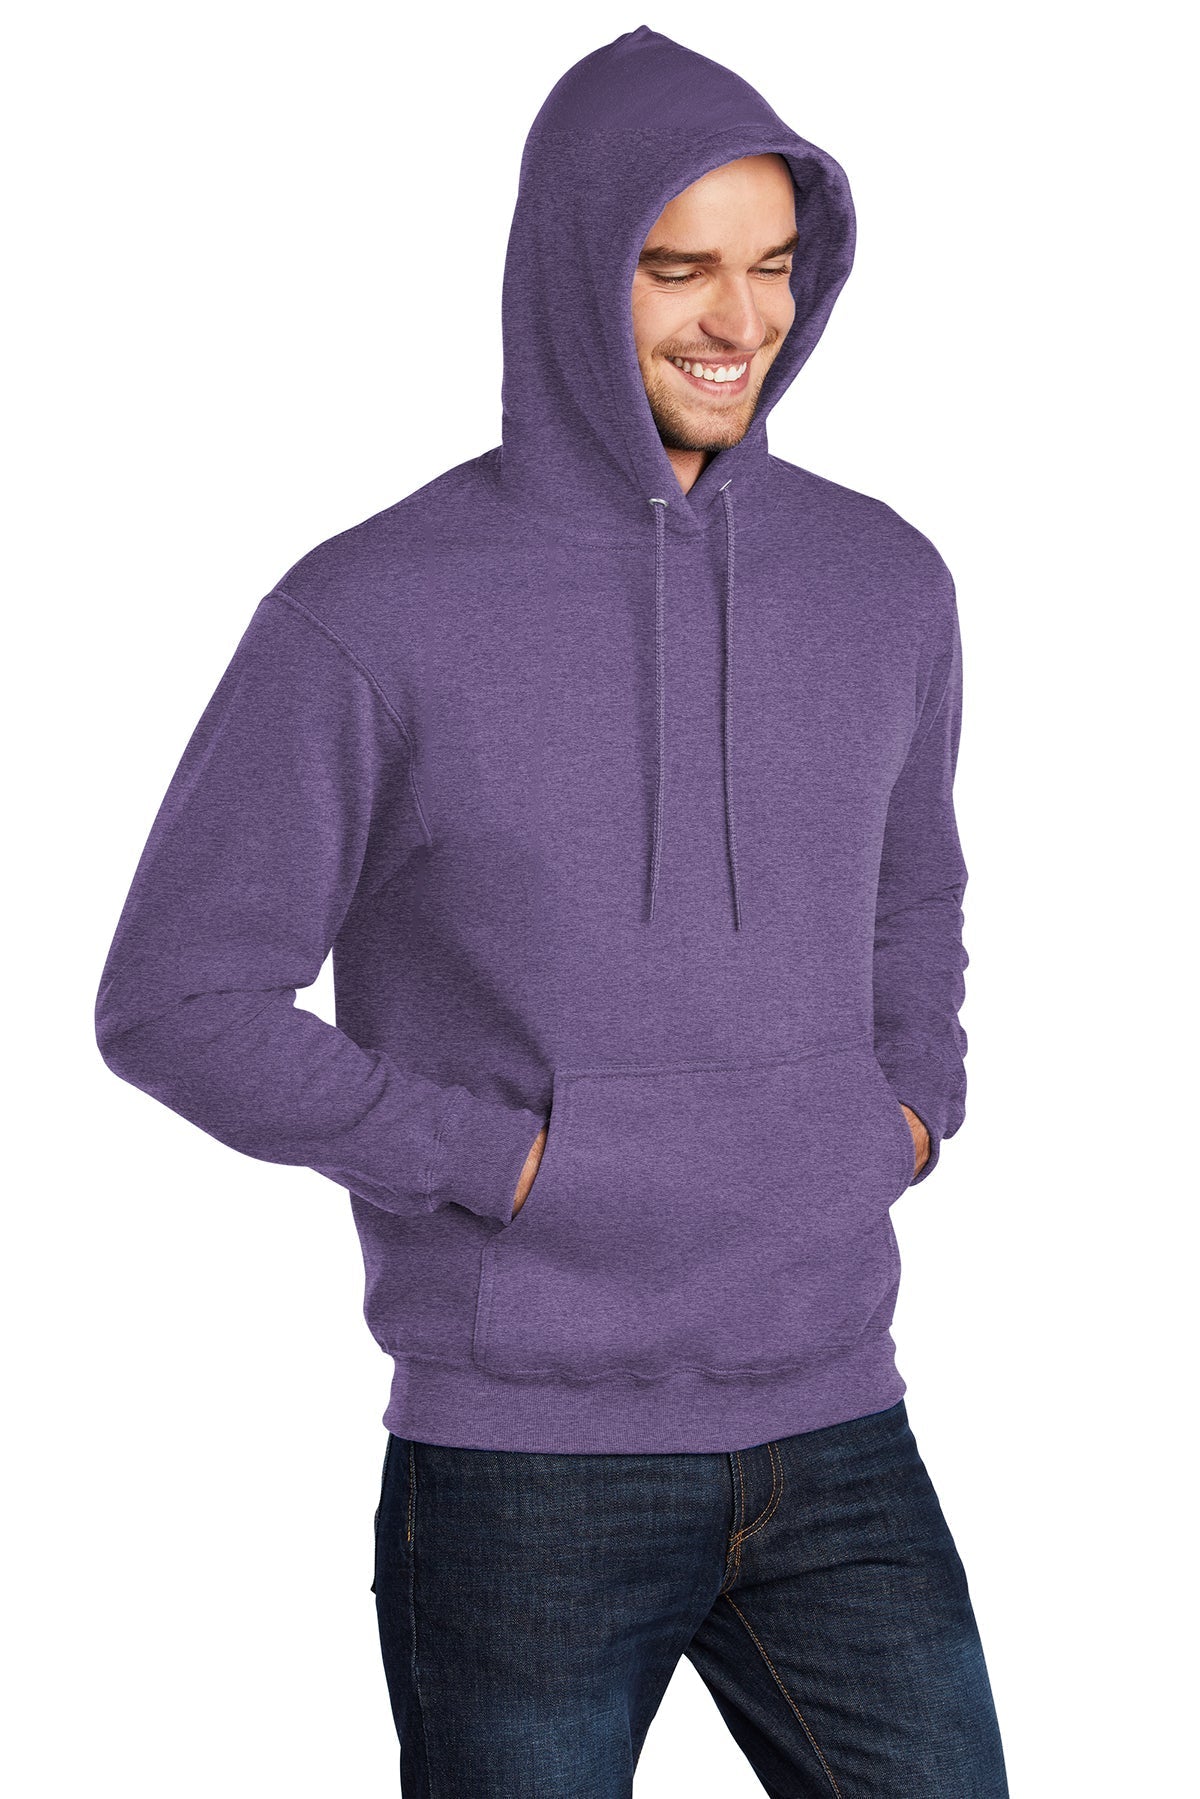 Fleece Pullover Hooded Sweatshirt  / Purple / Larkspur Middle School Wrestling